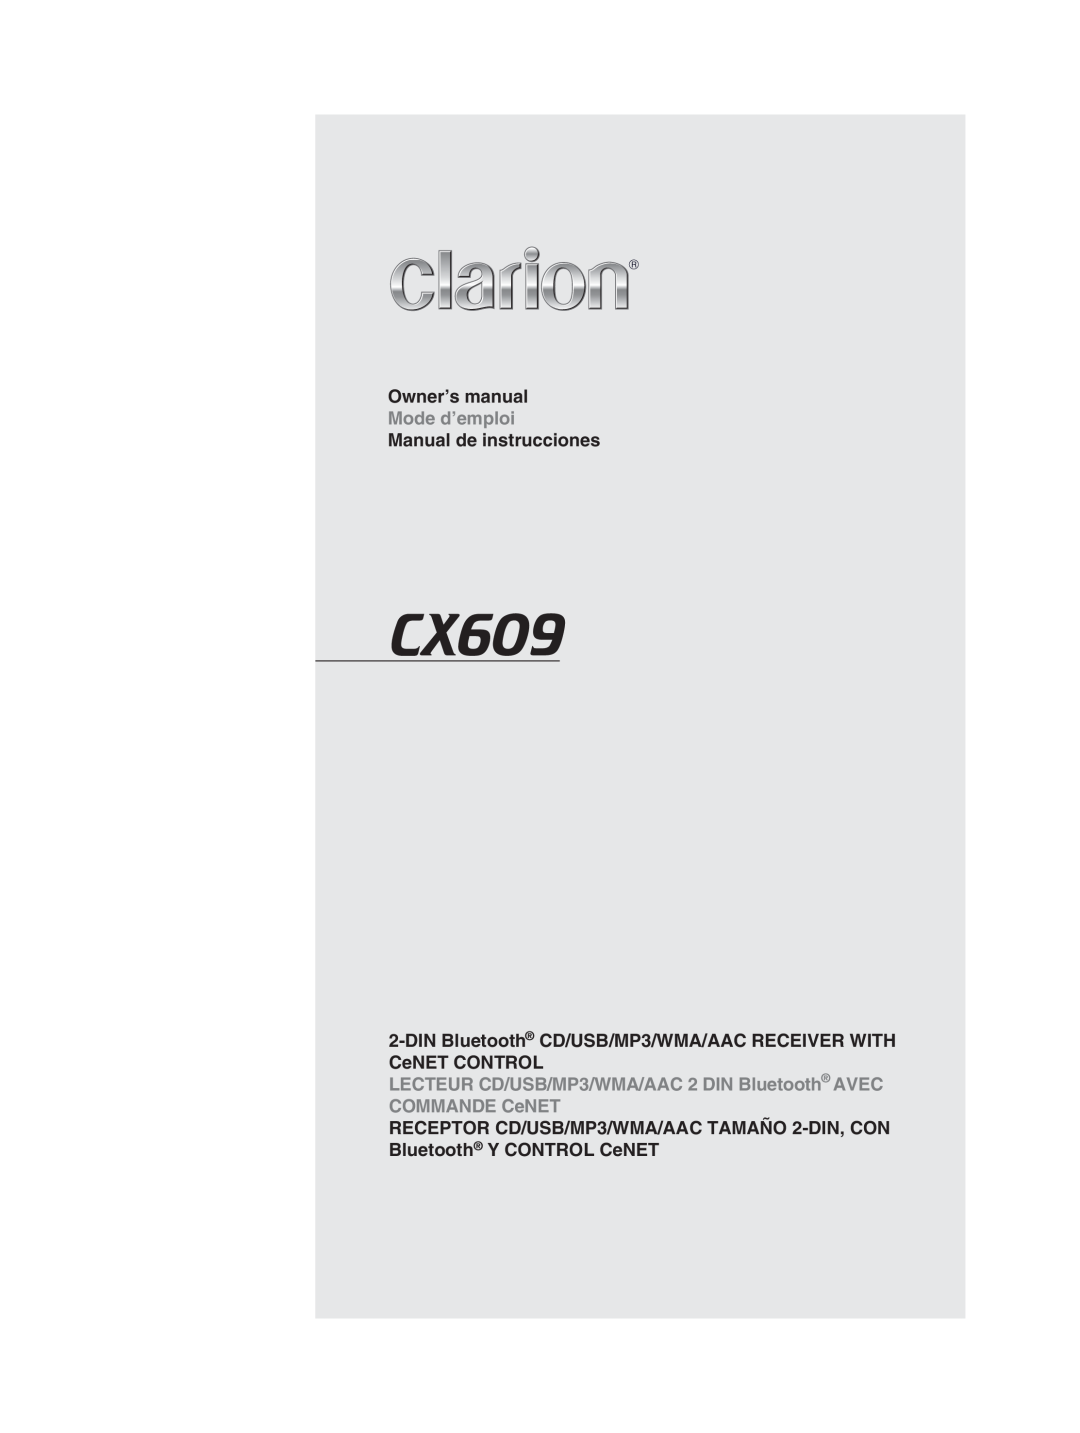 Clarion CX609 owner manual Owner’s manual Mode d’emploi Manual de instrucciones, Bluetooth Y CONTROL CeNET 